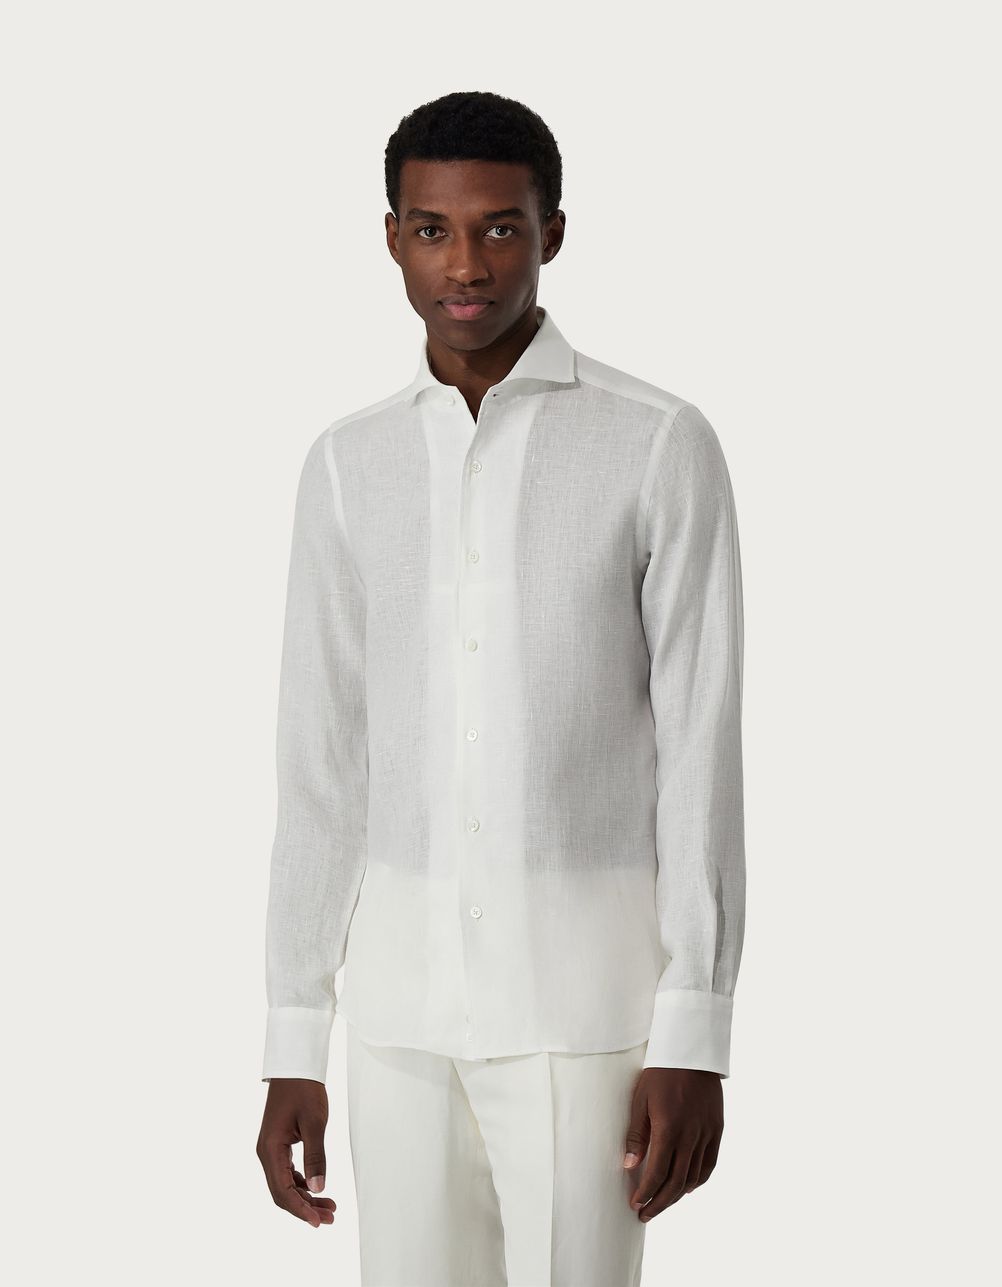 Slim-fit shirt in white linen